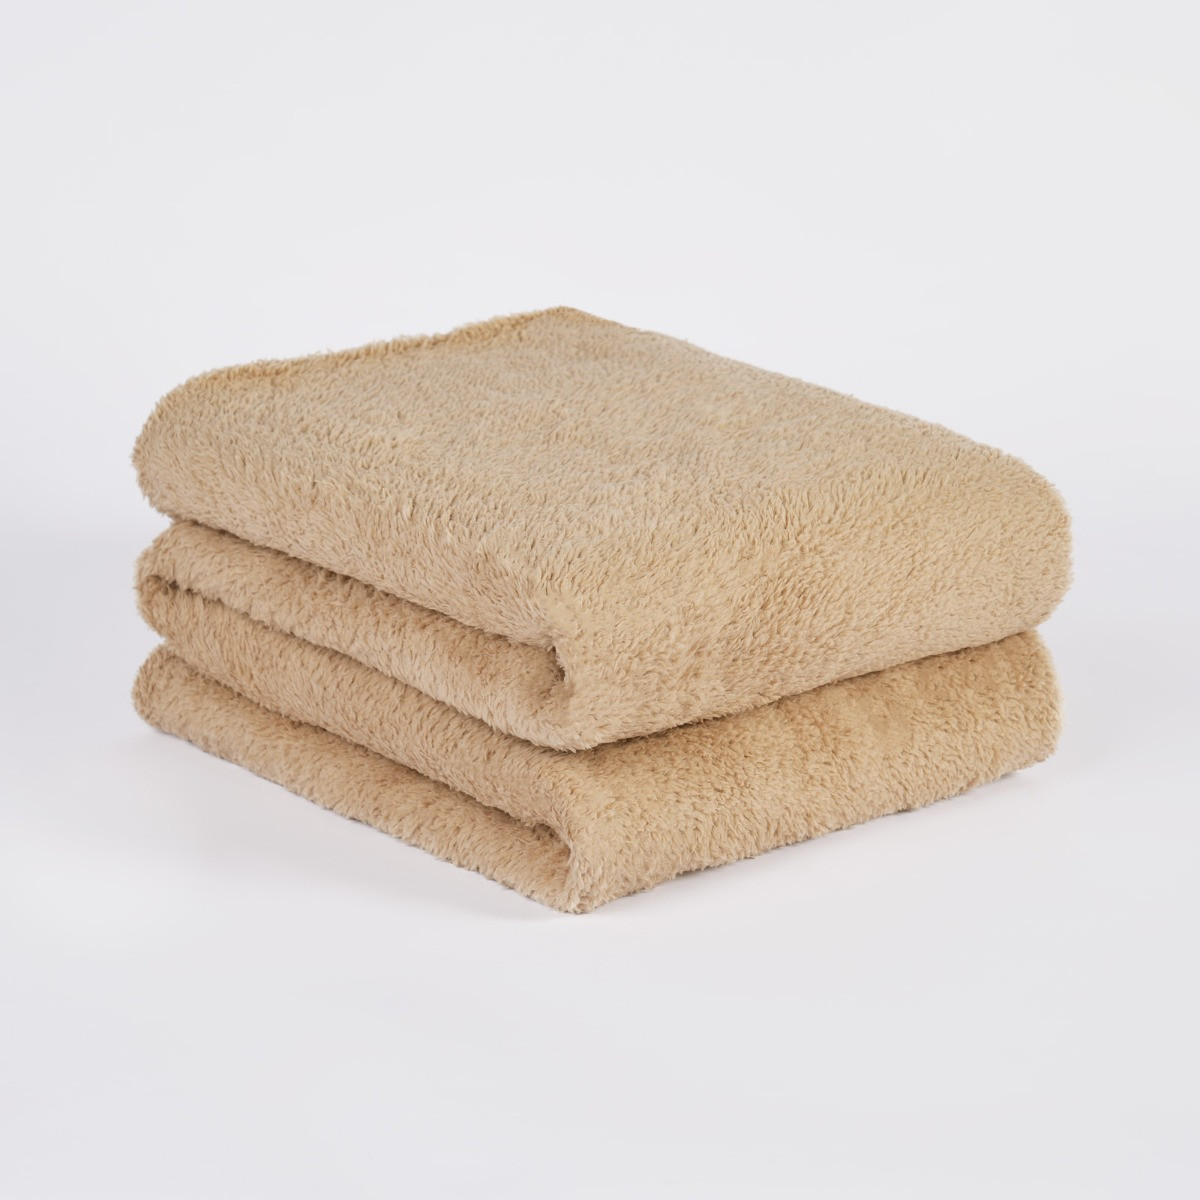 Brentfords Teddy Fleece Blanket Throw, Natural Latte Beige - 150 x 200cm>